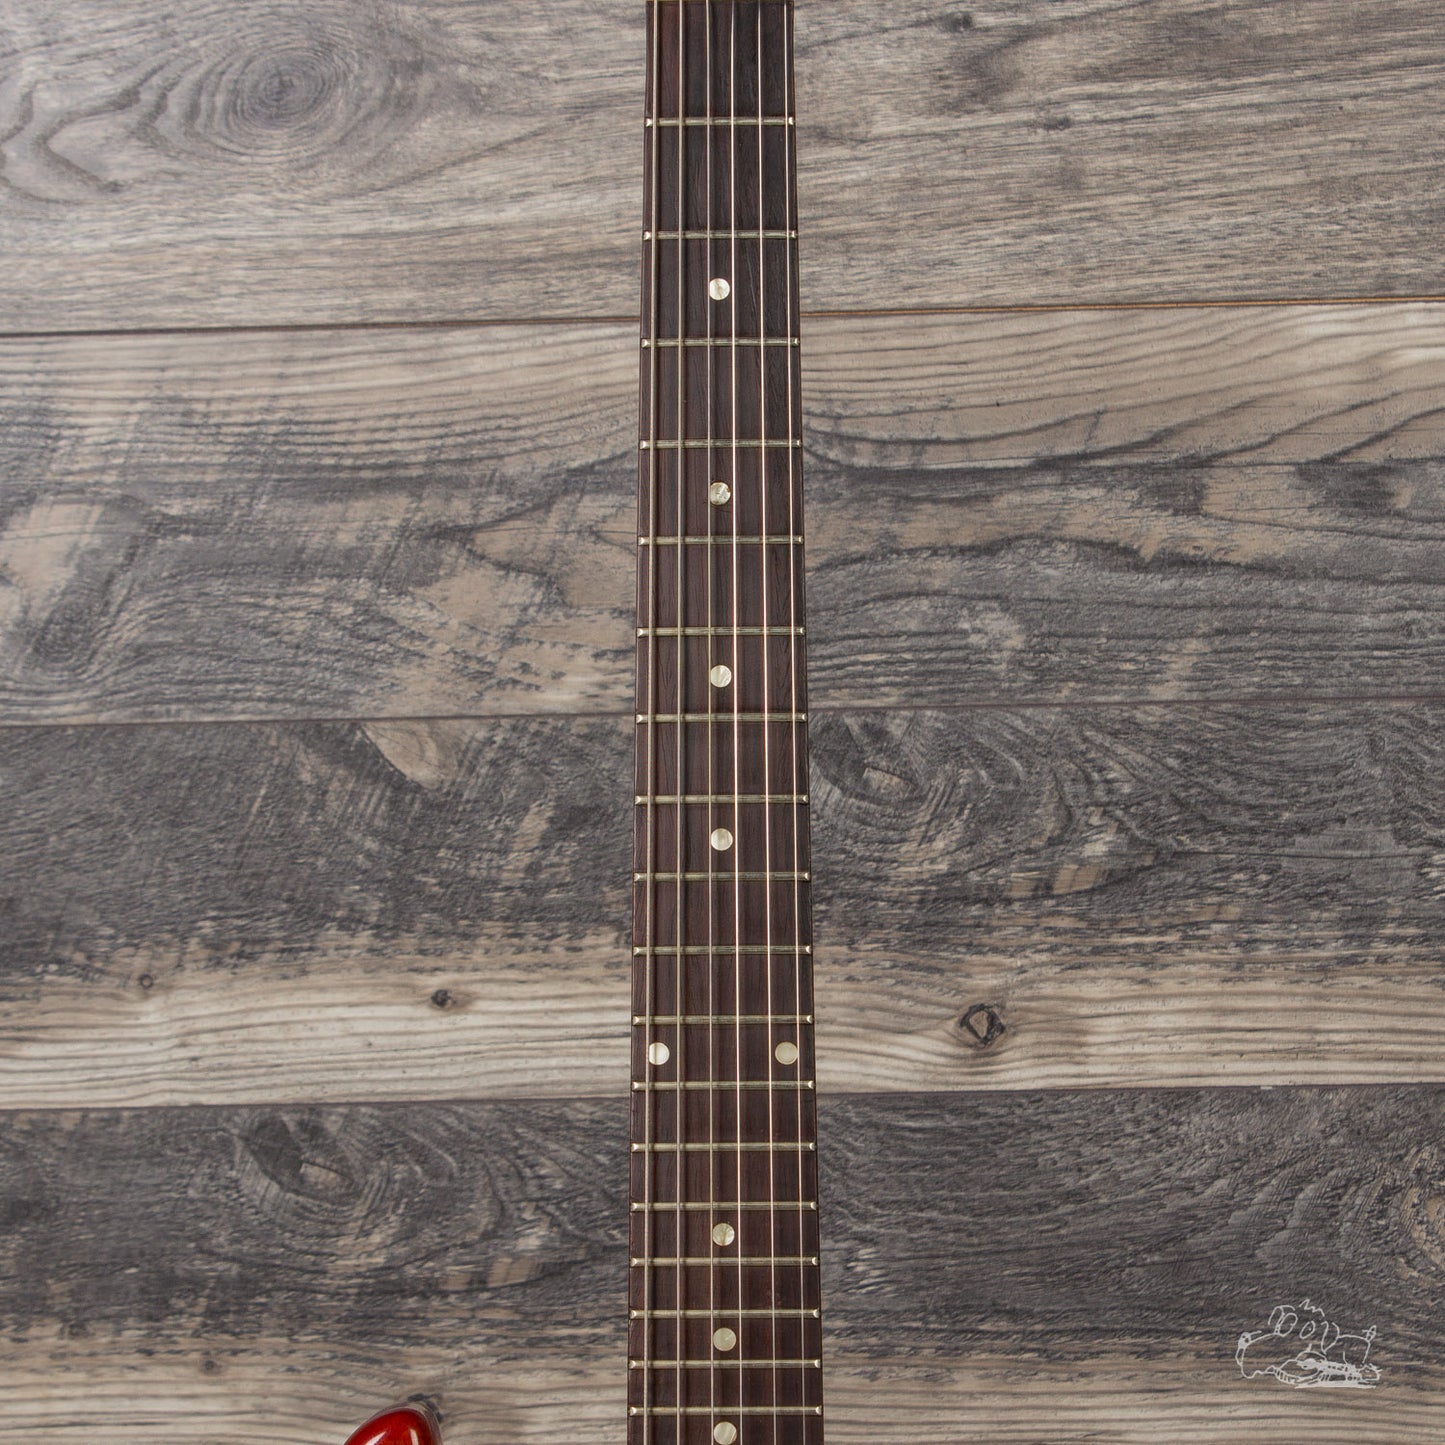 1959 Gibson Les Paul Junior